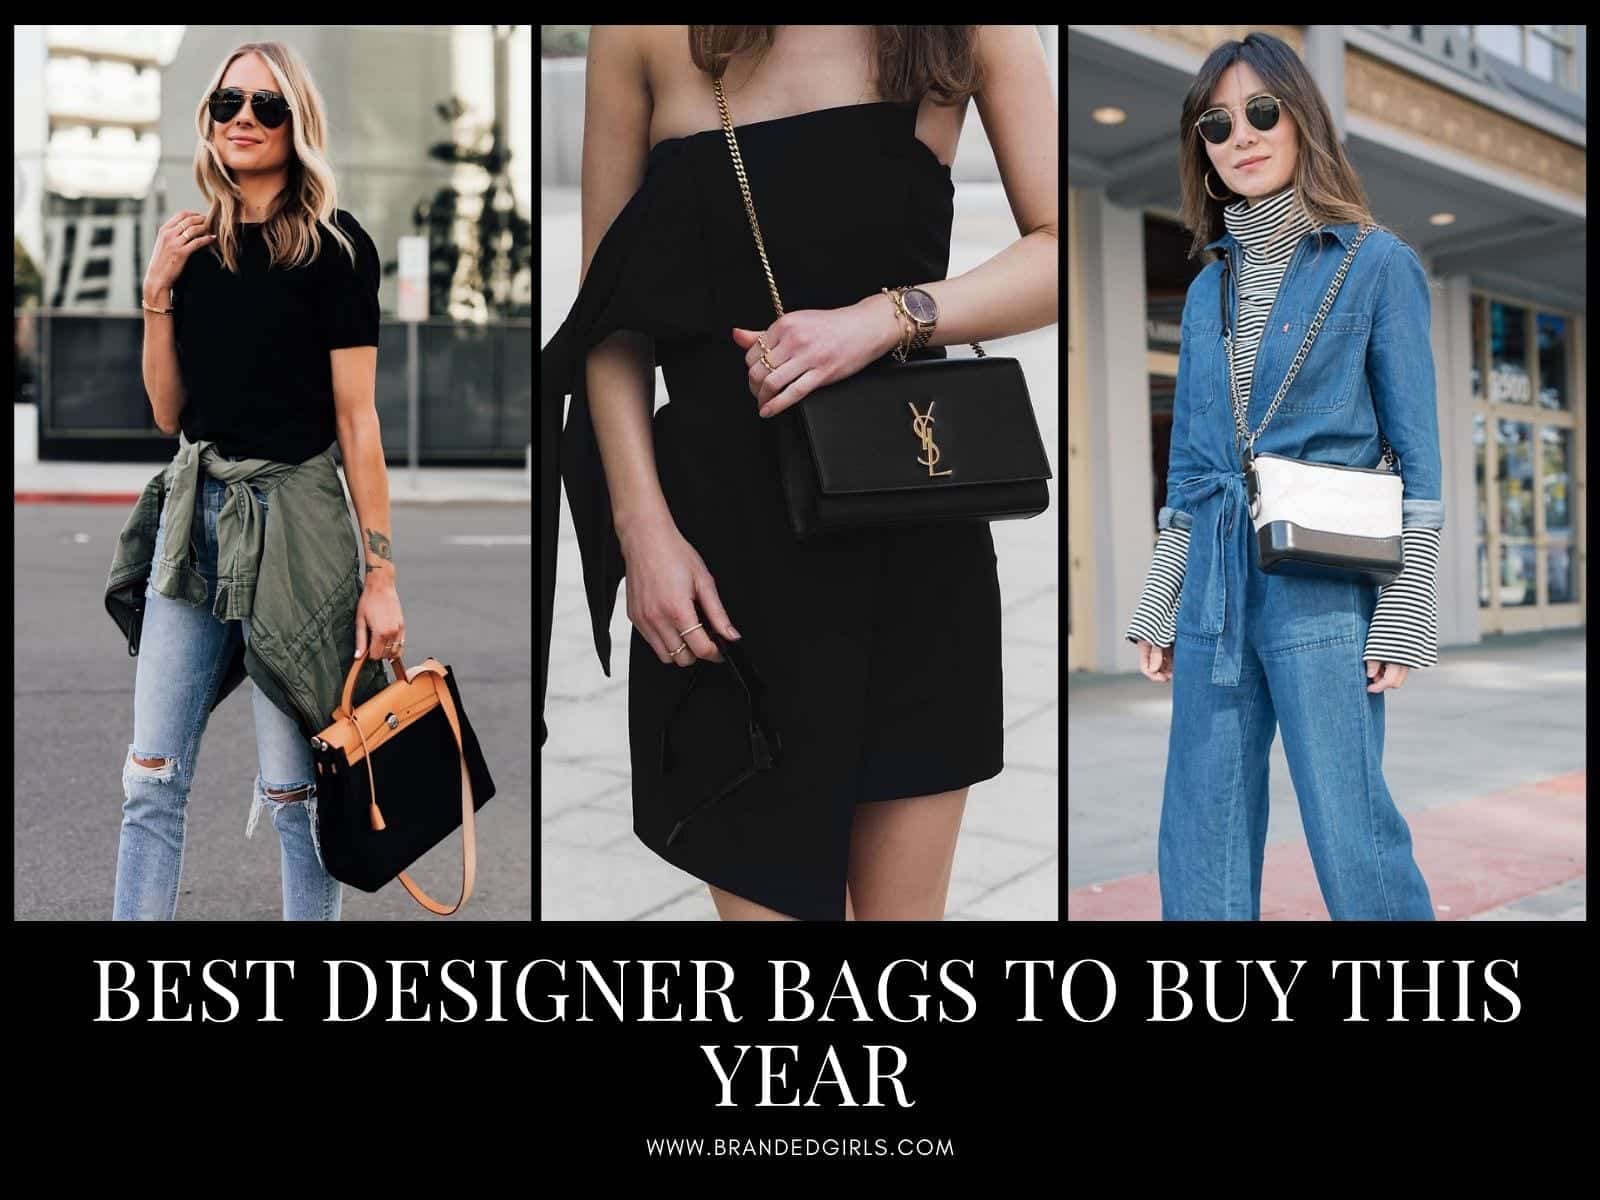 Presenting Bottega Veneta's Iconic Bag Styles - PurseBop